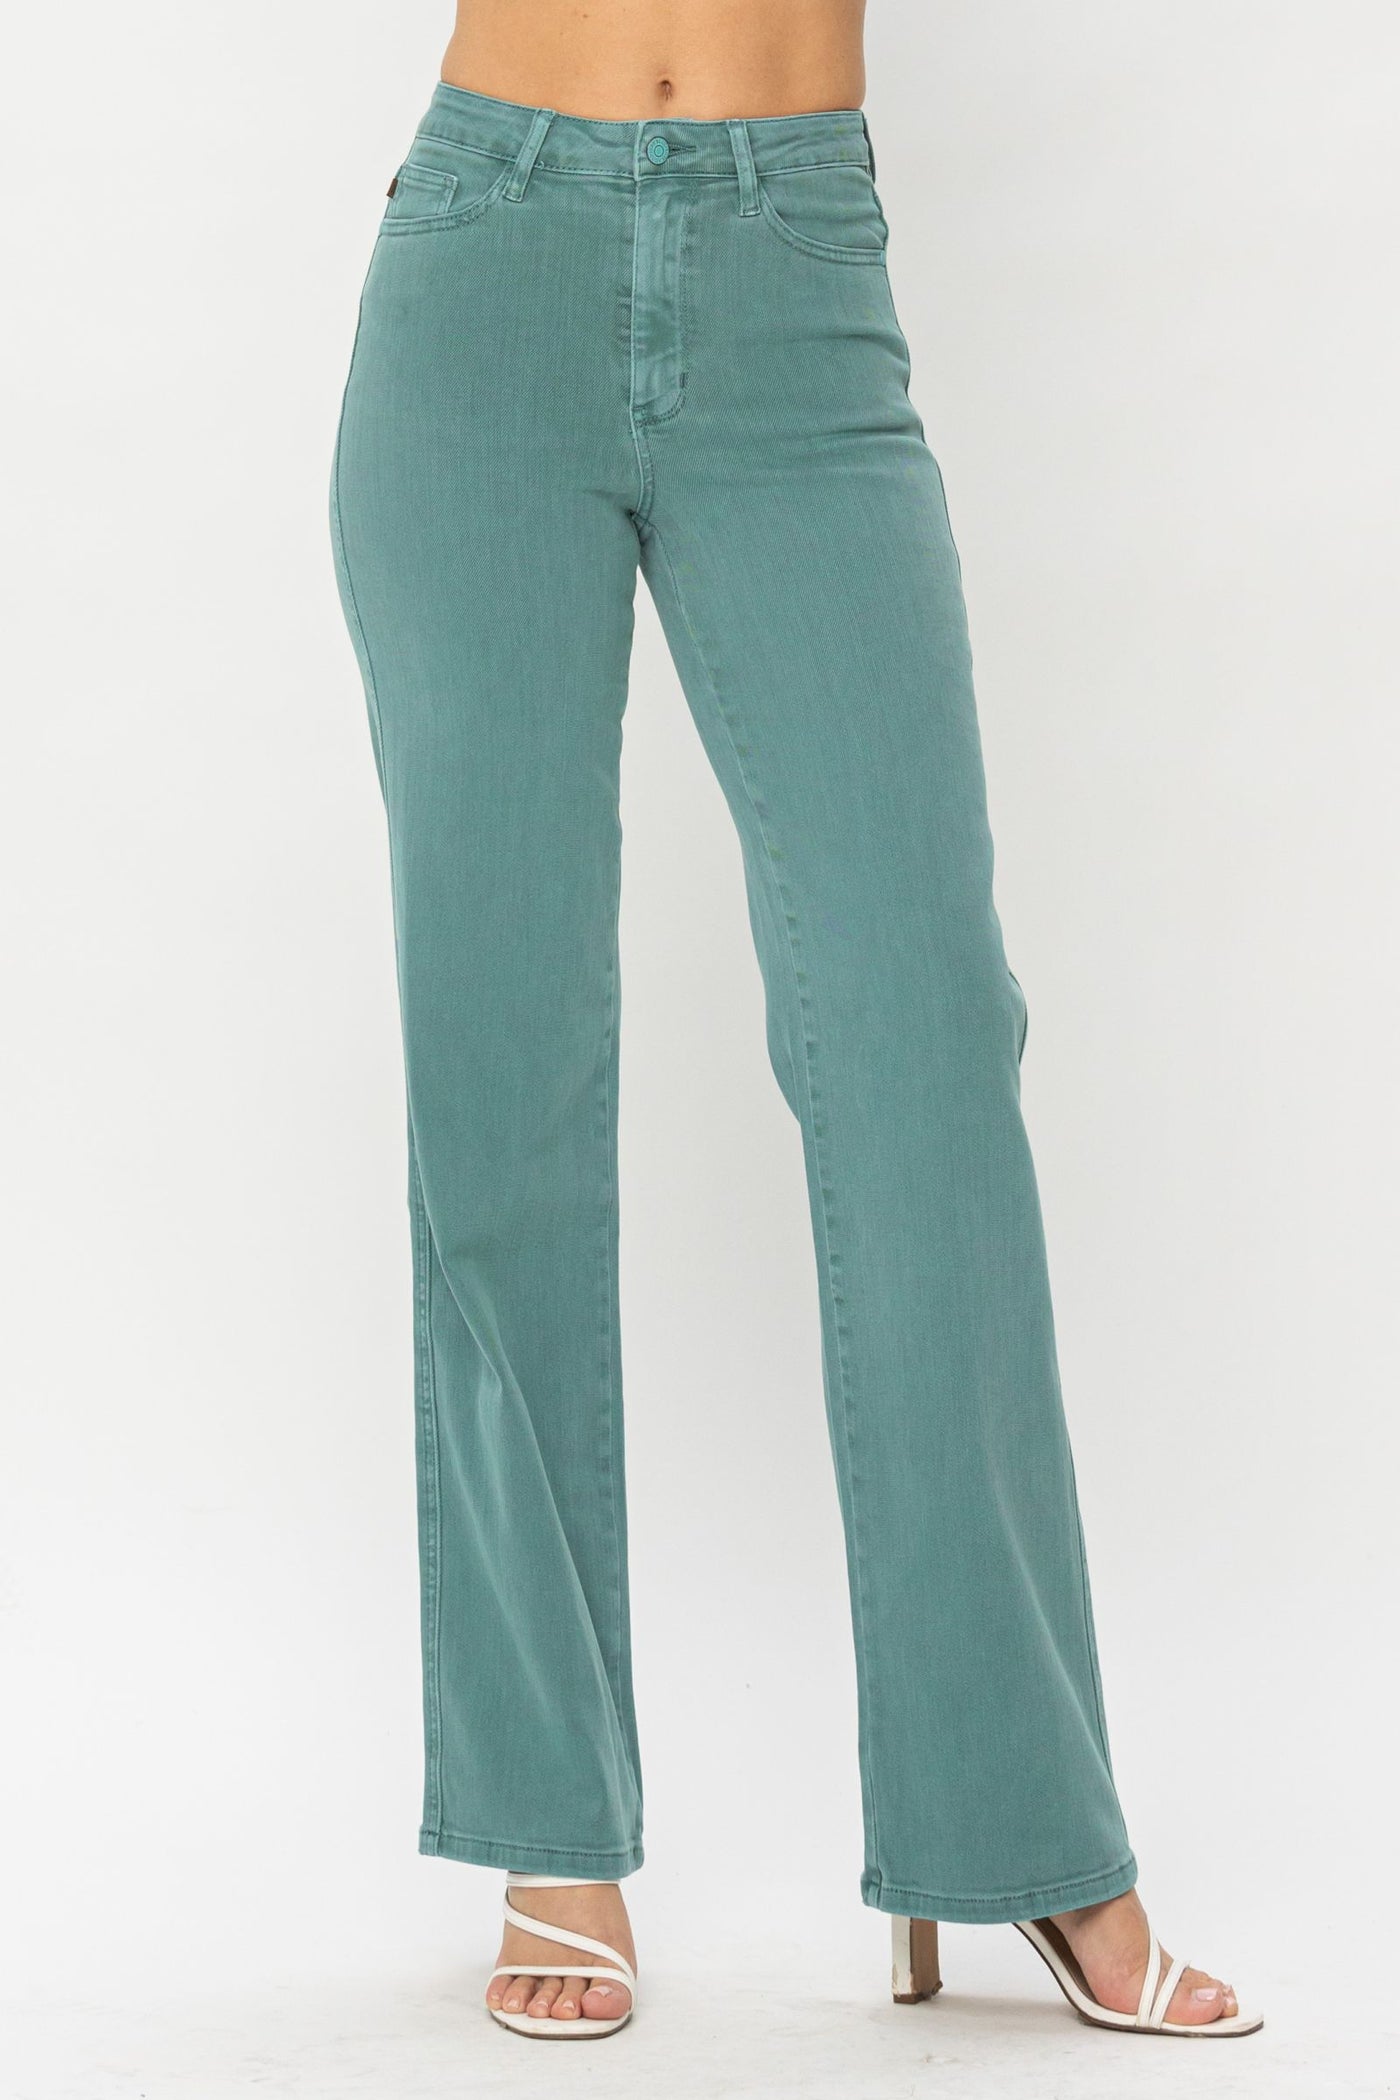 Judy Blue Oceania Sea Green 90's Denim Jeans